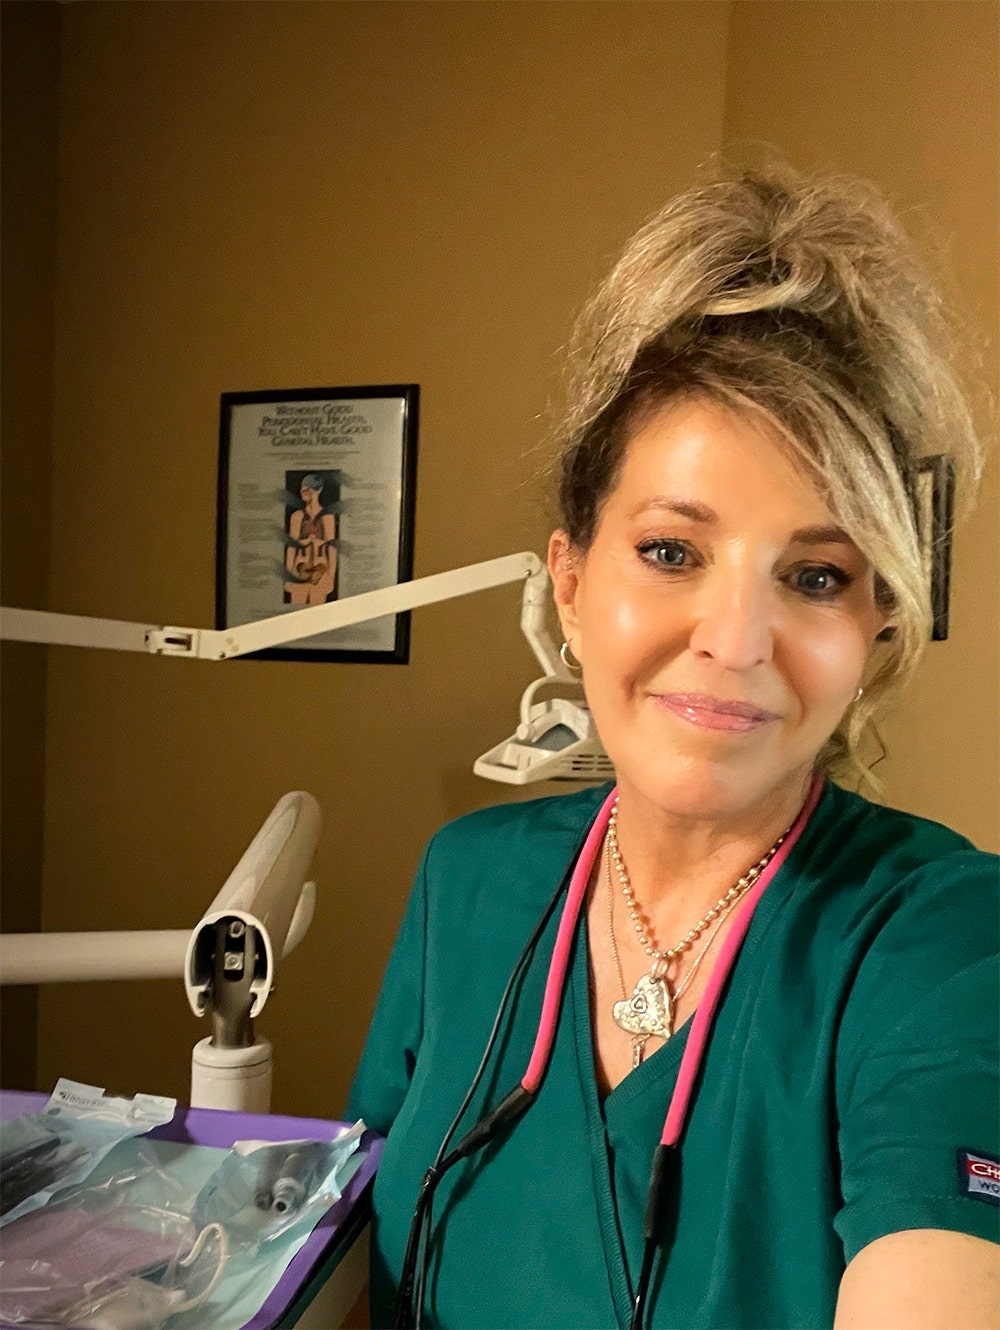 A close-up of Janet Gardner as a dental hygienist